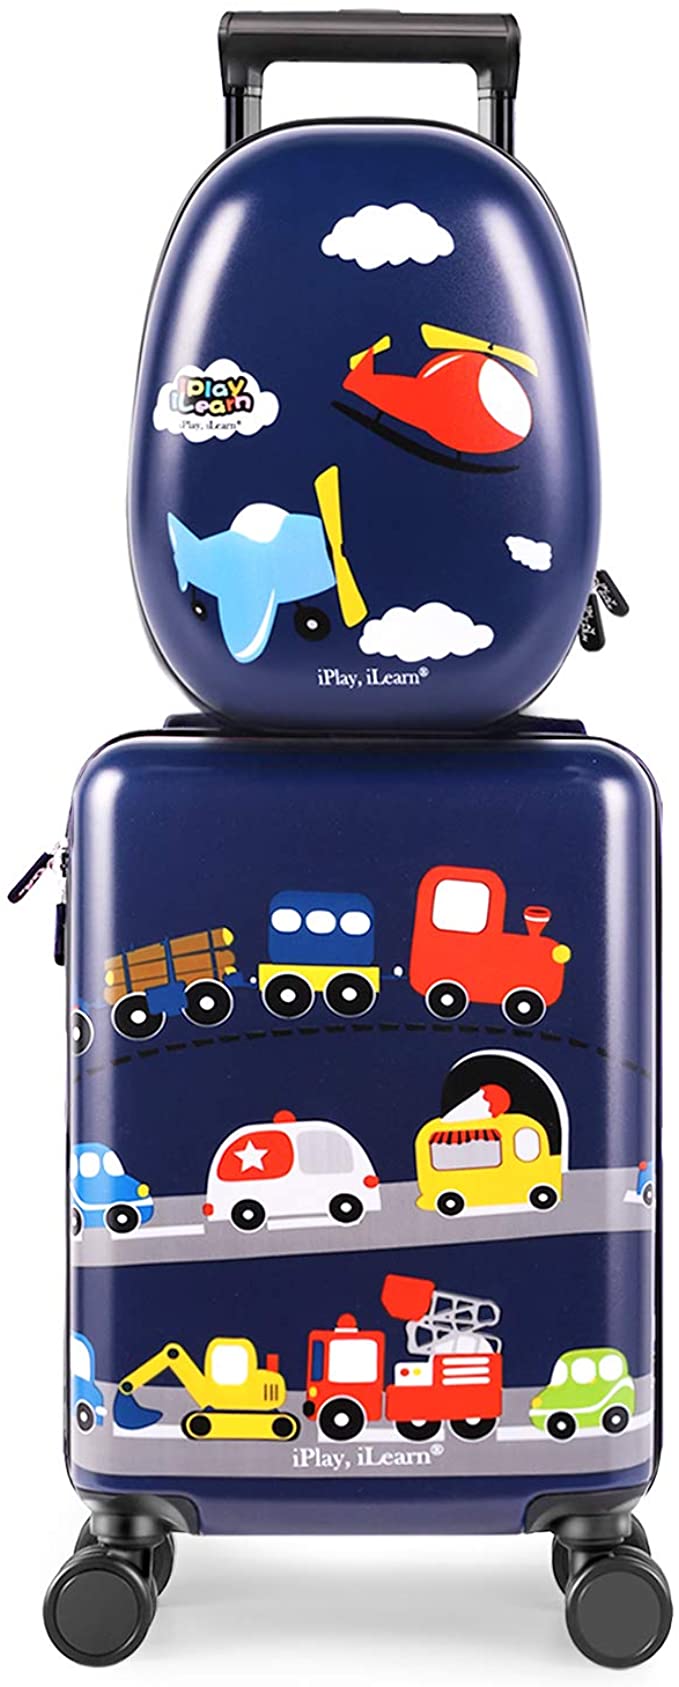 8. iPlay, iLearn Kids Luggage Set